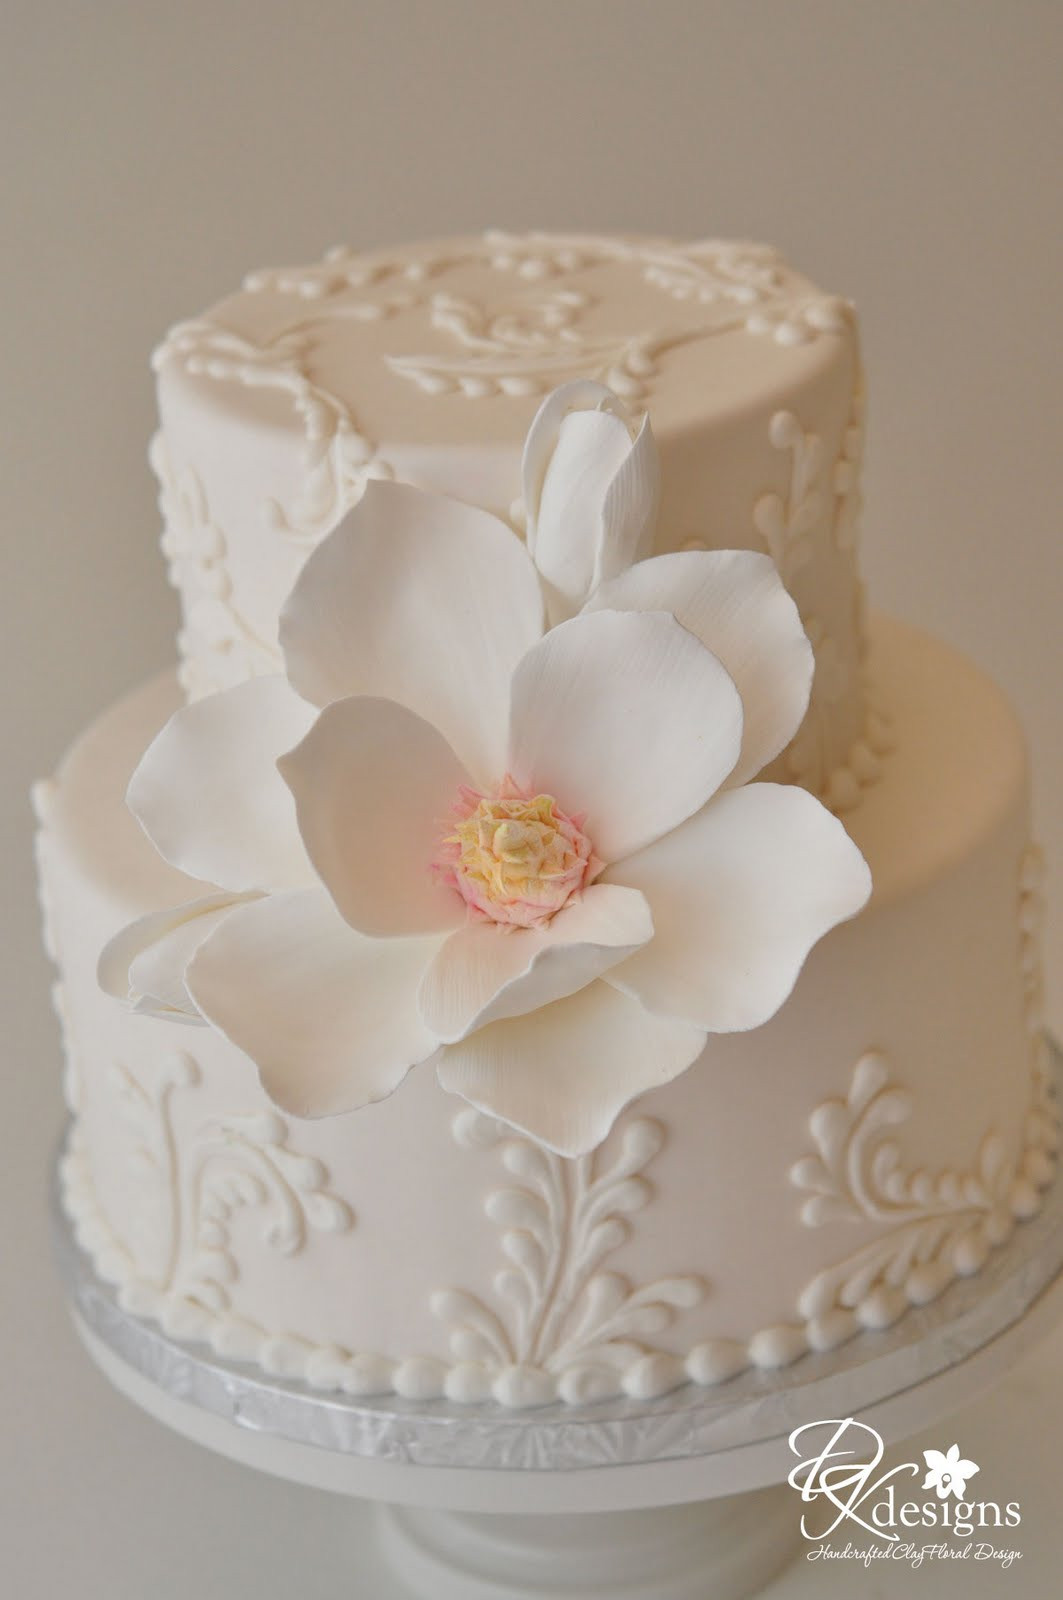 Magnolia Wedding Cakes
 DK Designs Form Magnolia Cake Flower